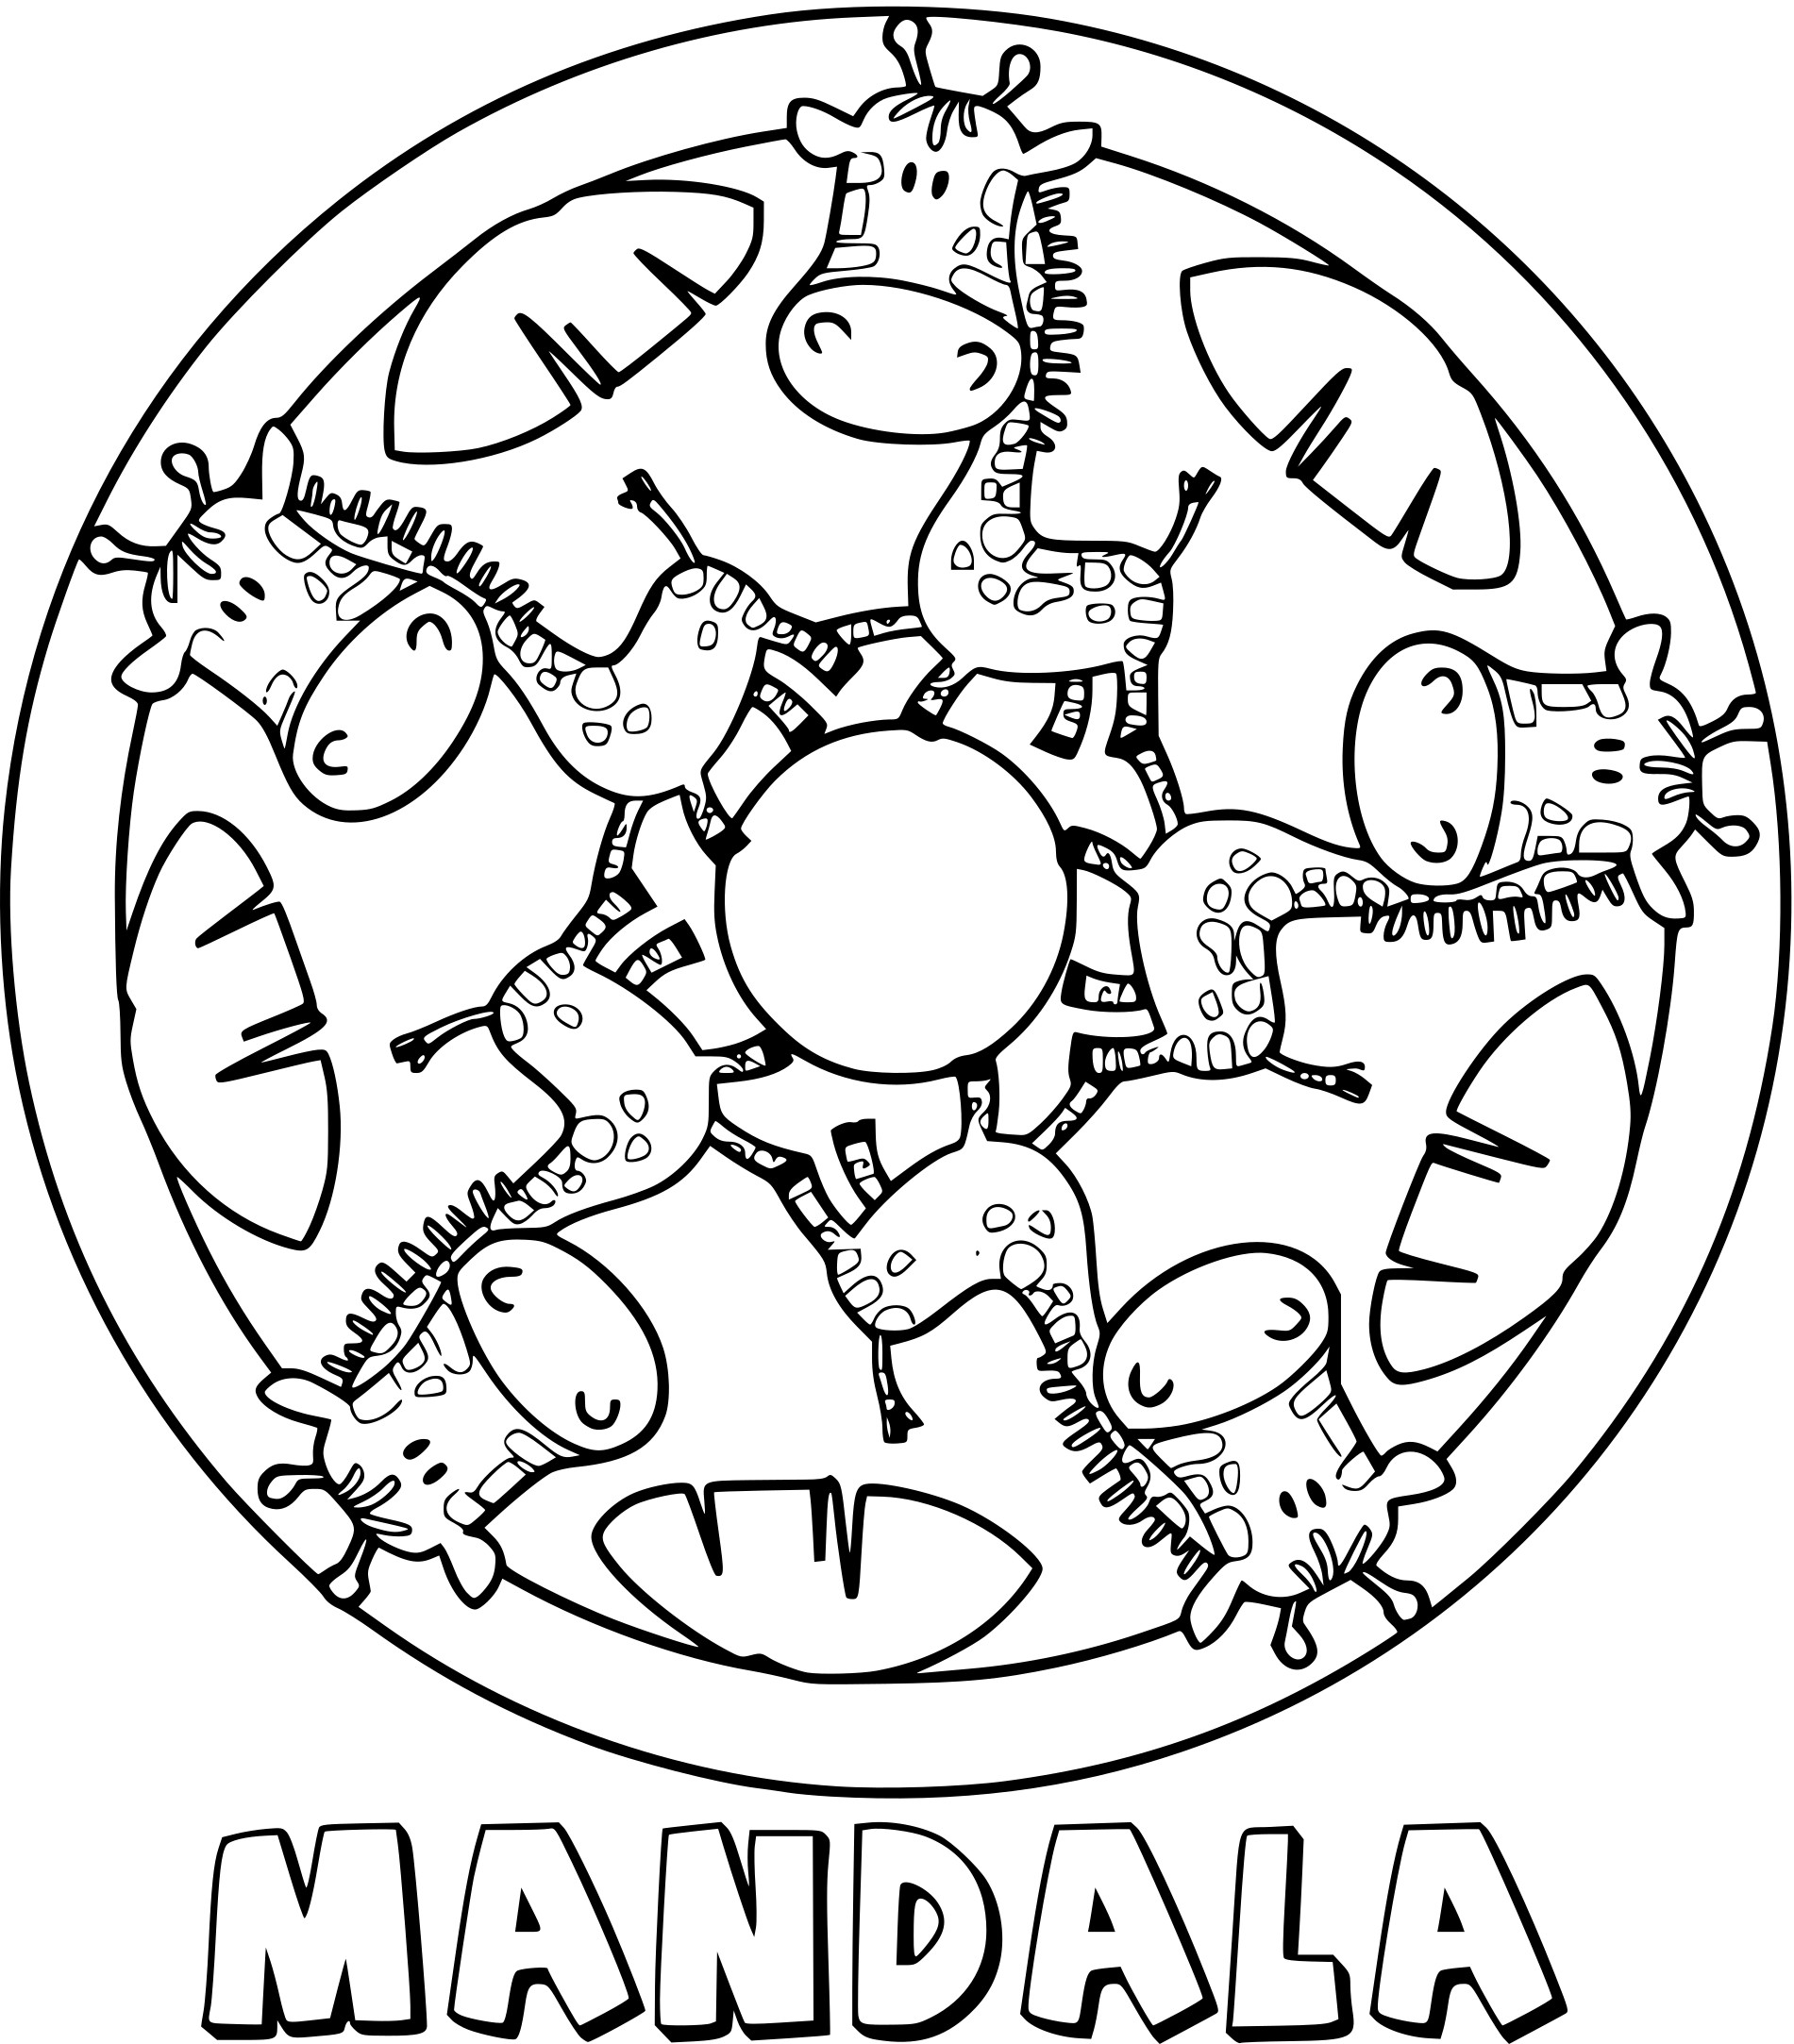 Mandala Giraffe coloring page